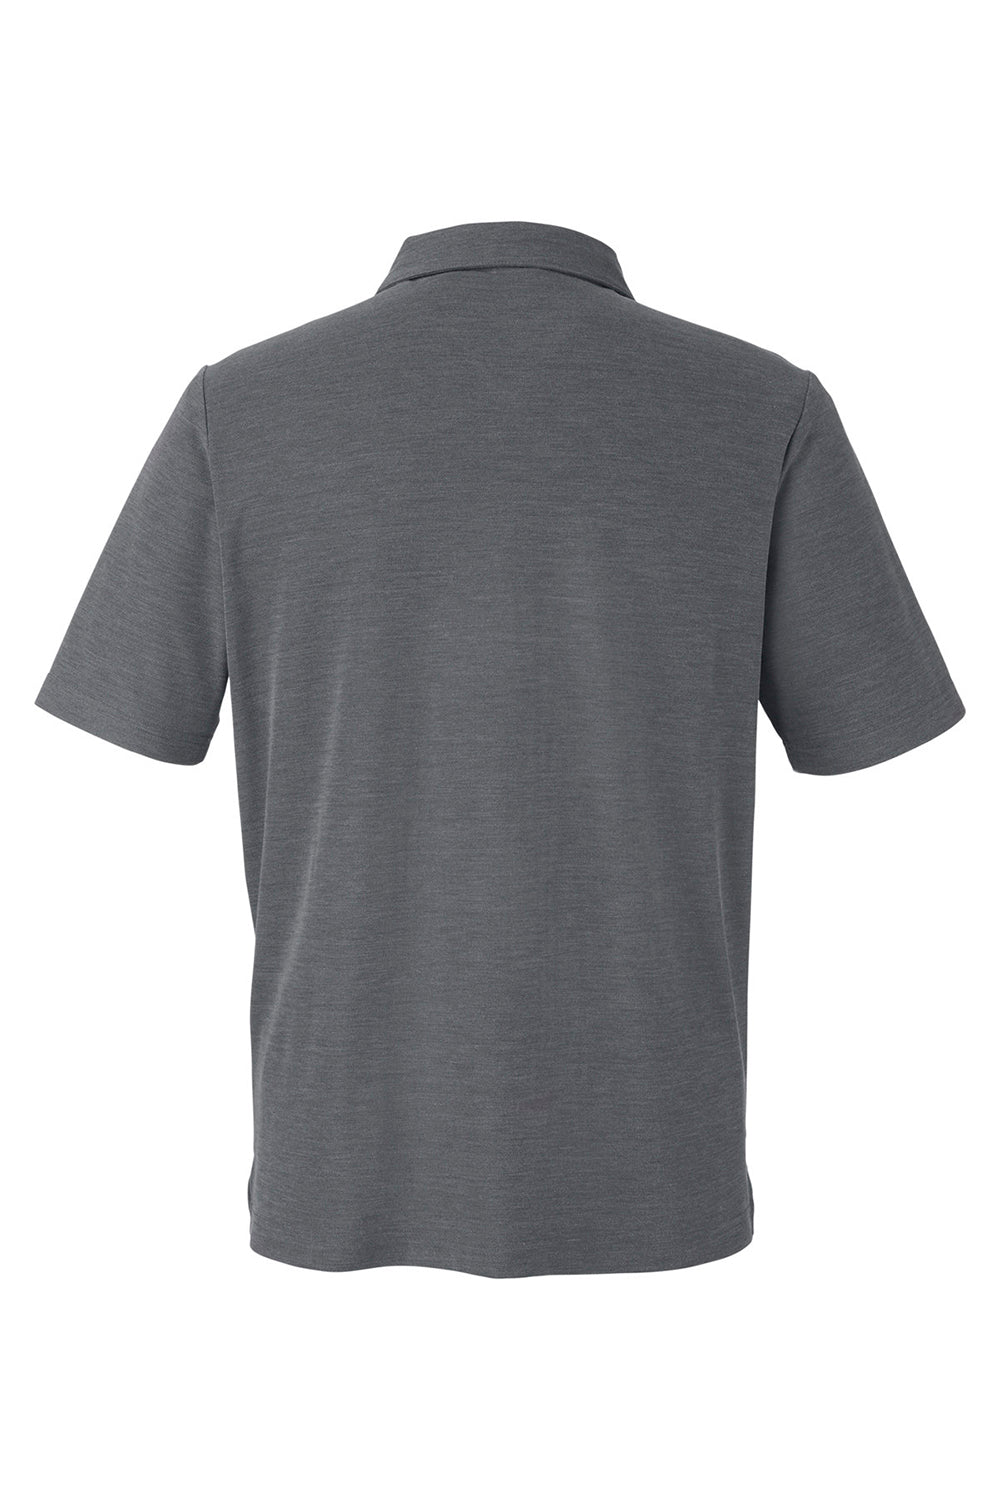 Core 365 CE112 Mens Fusion ChromaSoft Performance Moisture Wicking Short Sleeve Polo Shirt Heather Carbon Grey Flat Back